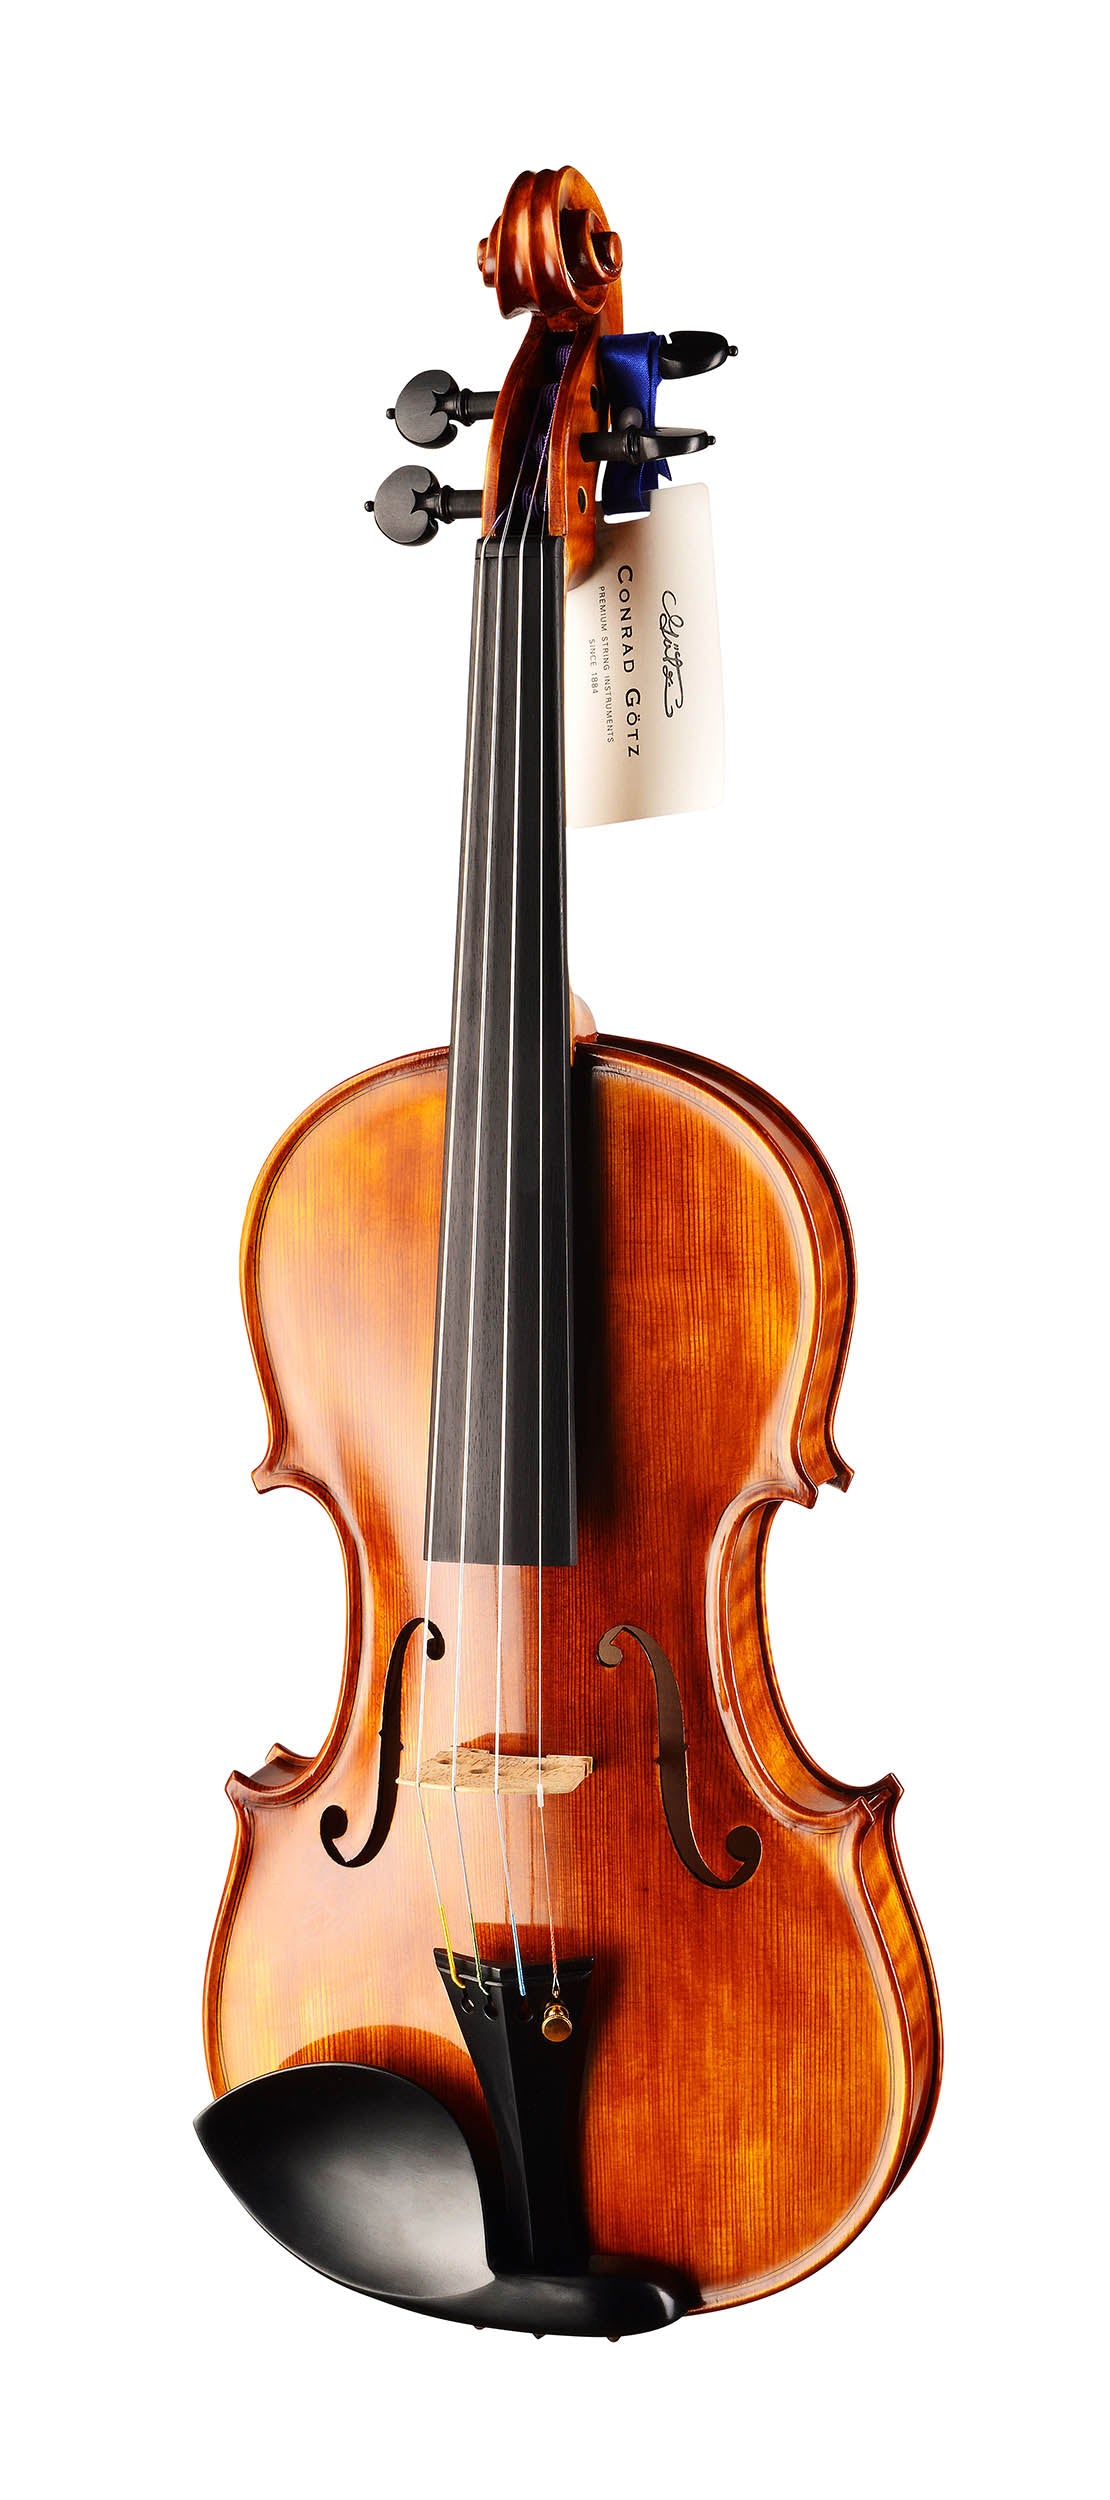 GOLDEN STATE Violine #123 GS